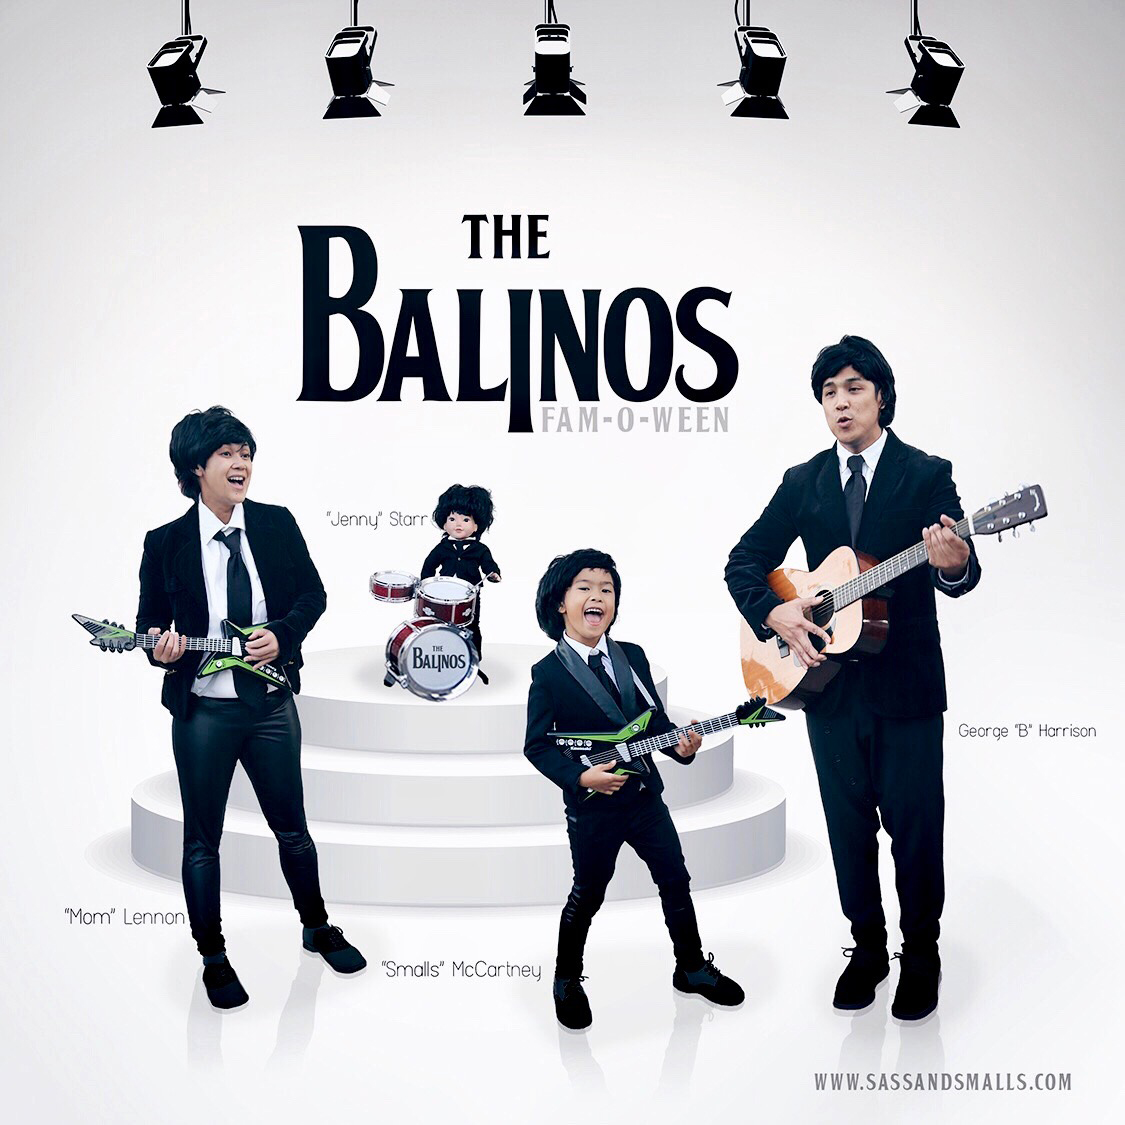 The Balinos aka The Beatles Fam-o-ween Album Collection www.sassandsmalls.com